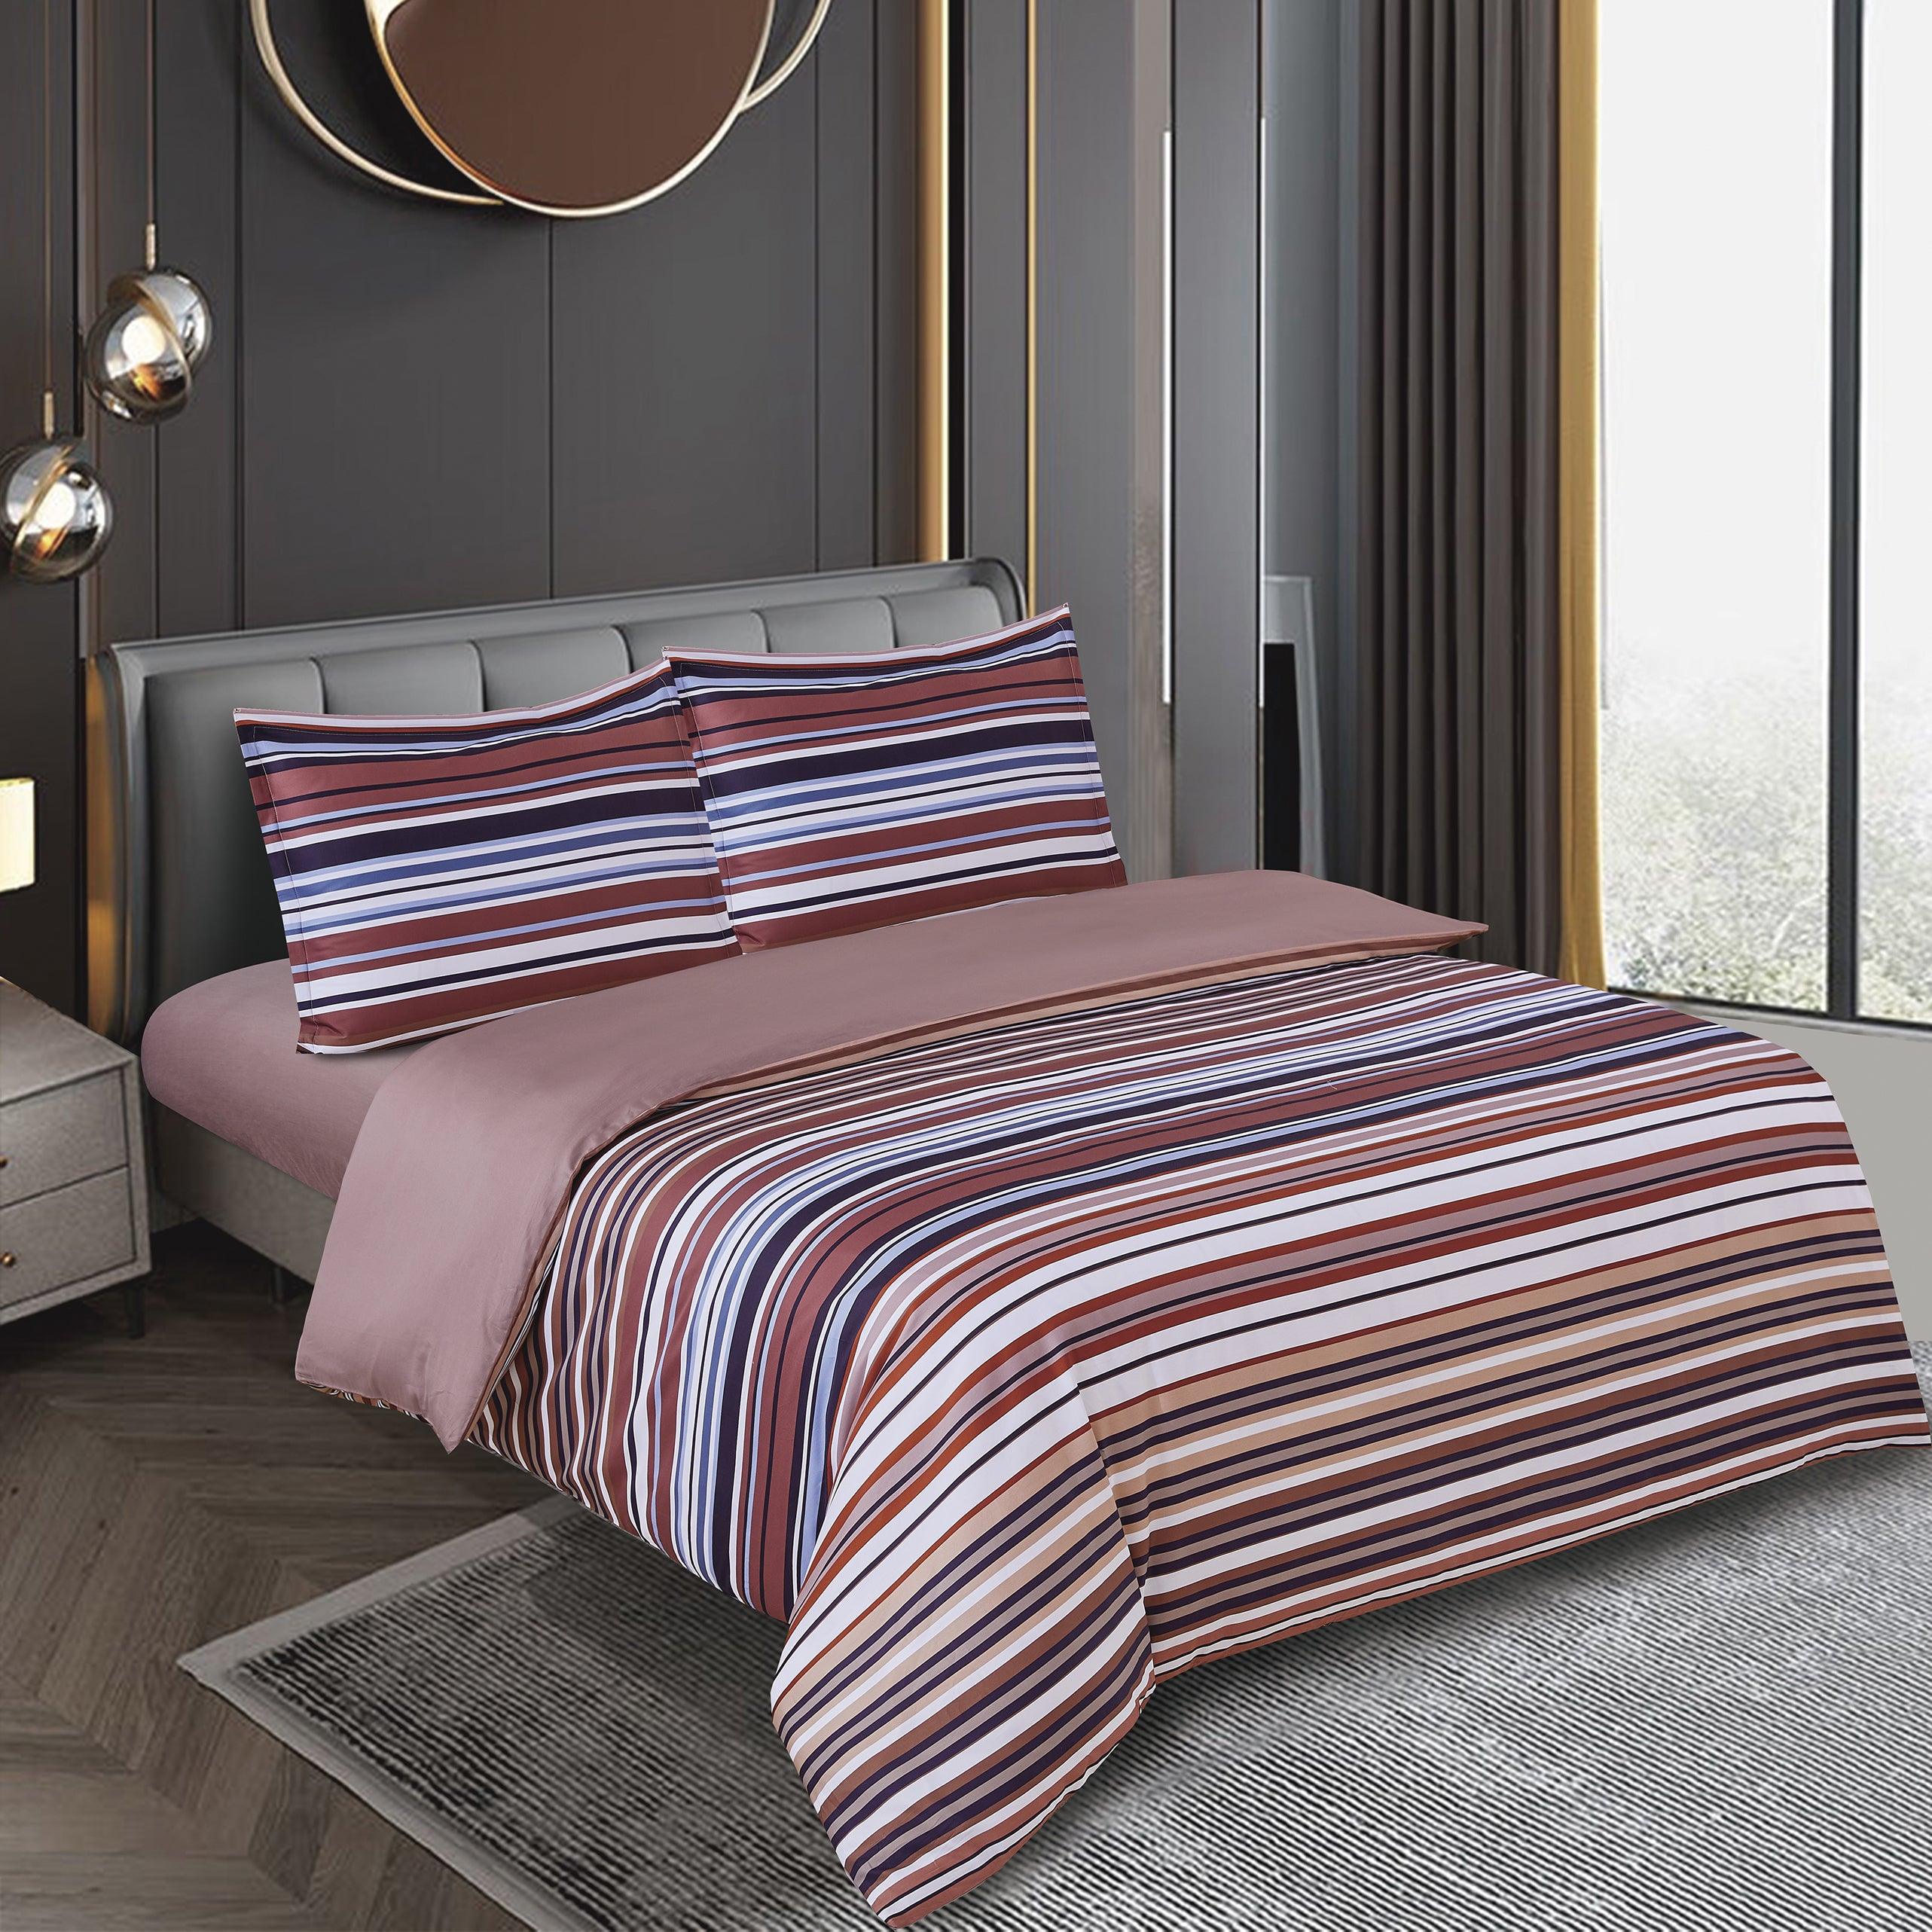 Madrid 4 Piece Bedding Set - Elegant Linen